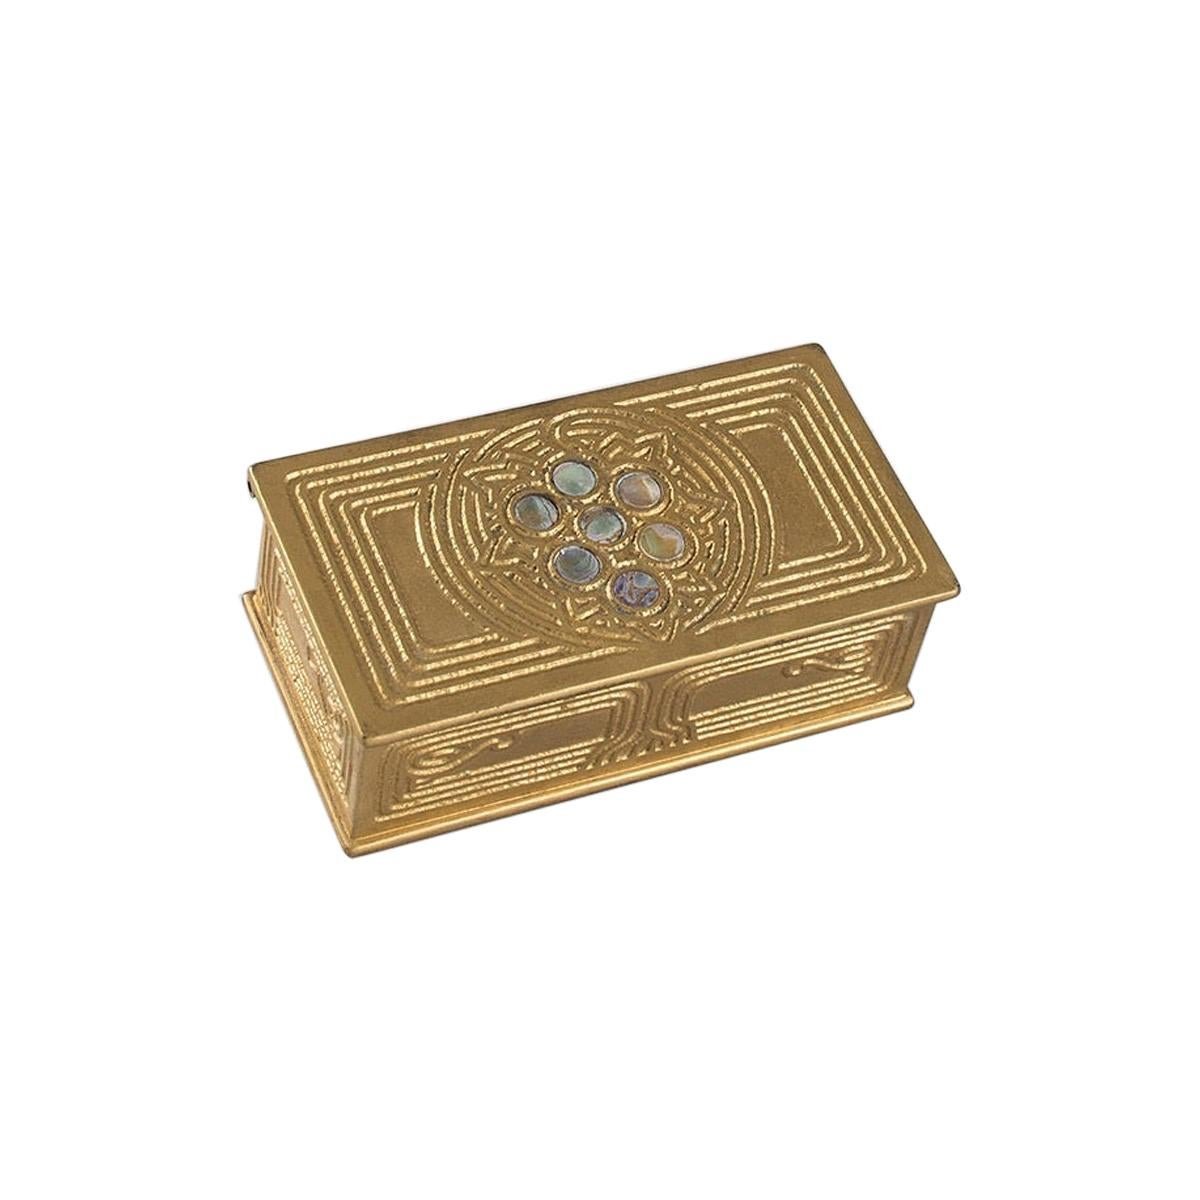 Tiffany Studios New York Gilt Bronze and Abalone Stamp Box